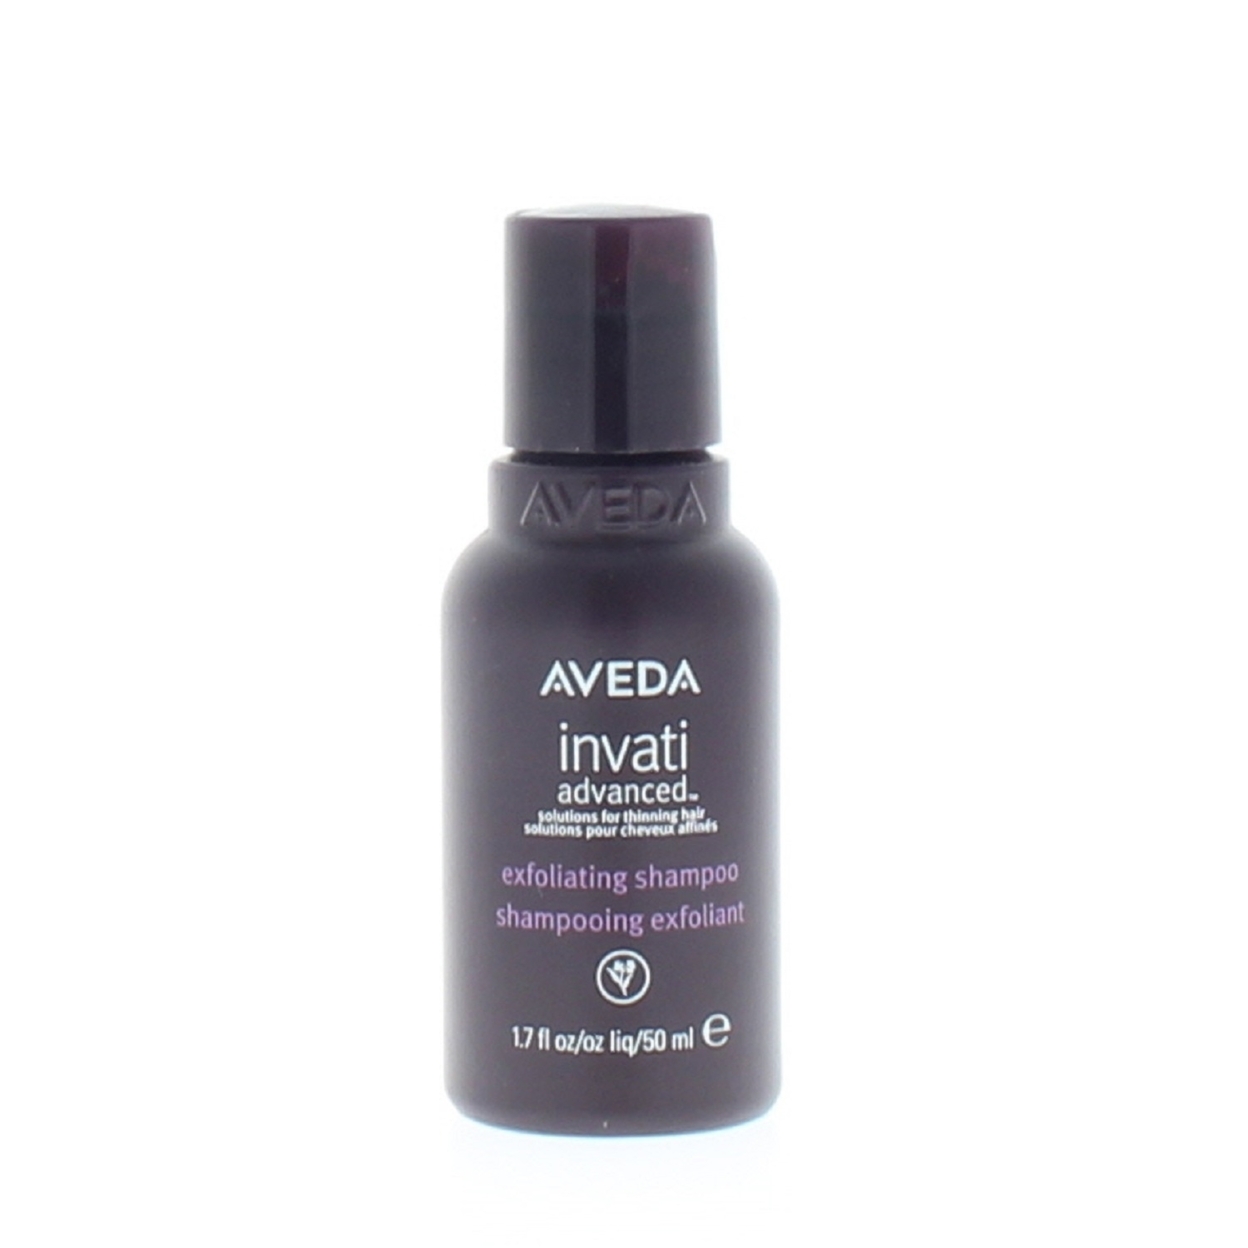 Aveda Invati Advanced Exfoliating Shampoo 1.7oz/50ml